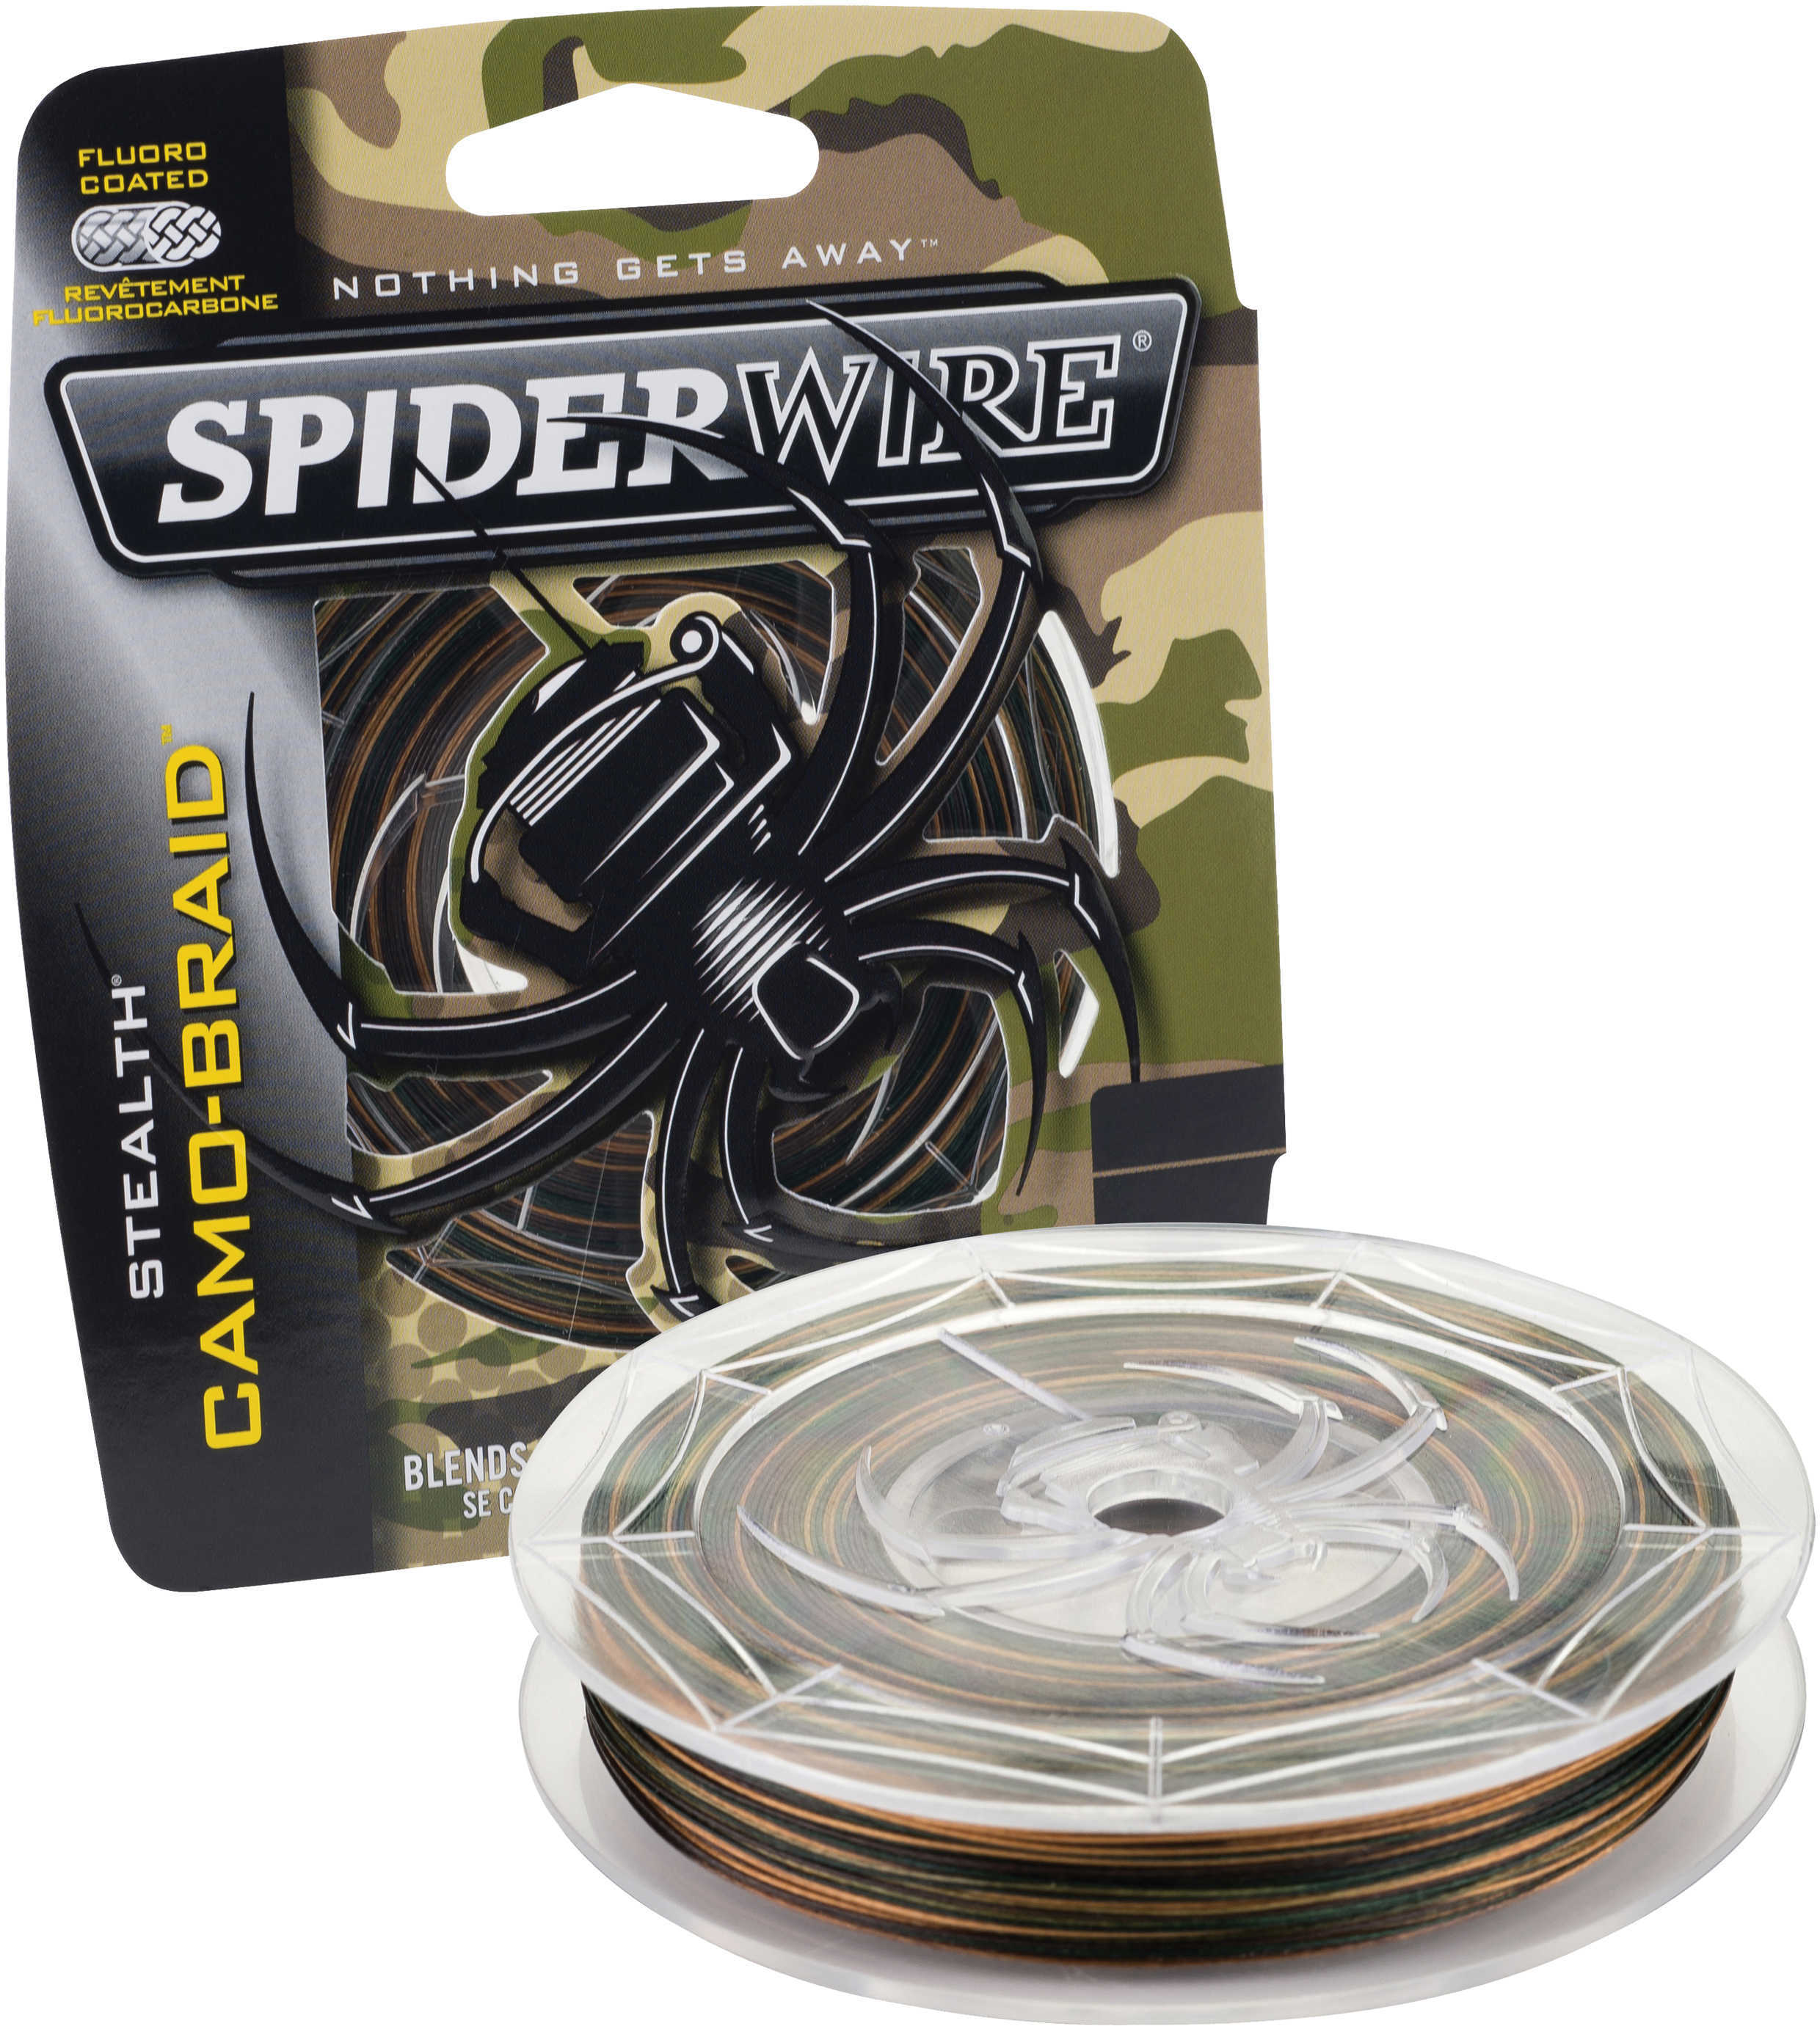 Spiderwire Stealth Braid, Camo 65 lb, 300 Yards Md: 1339798